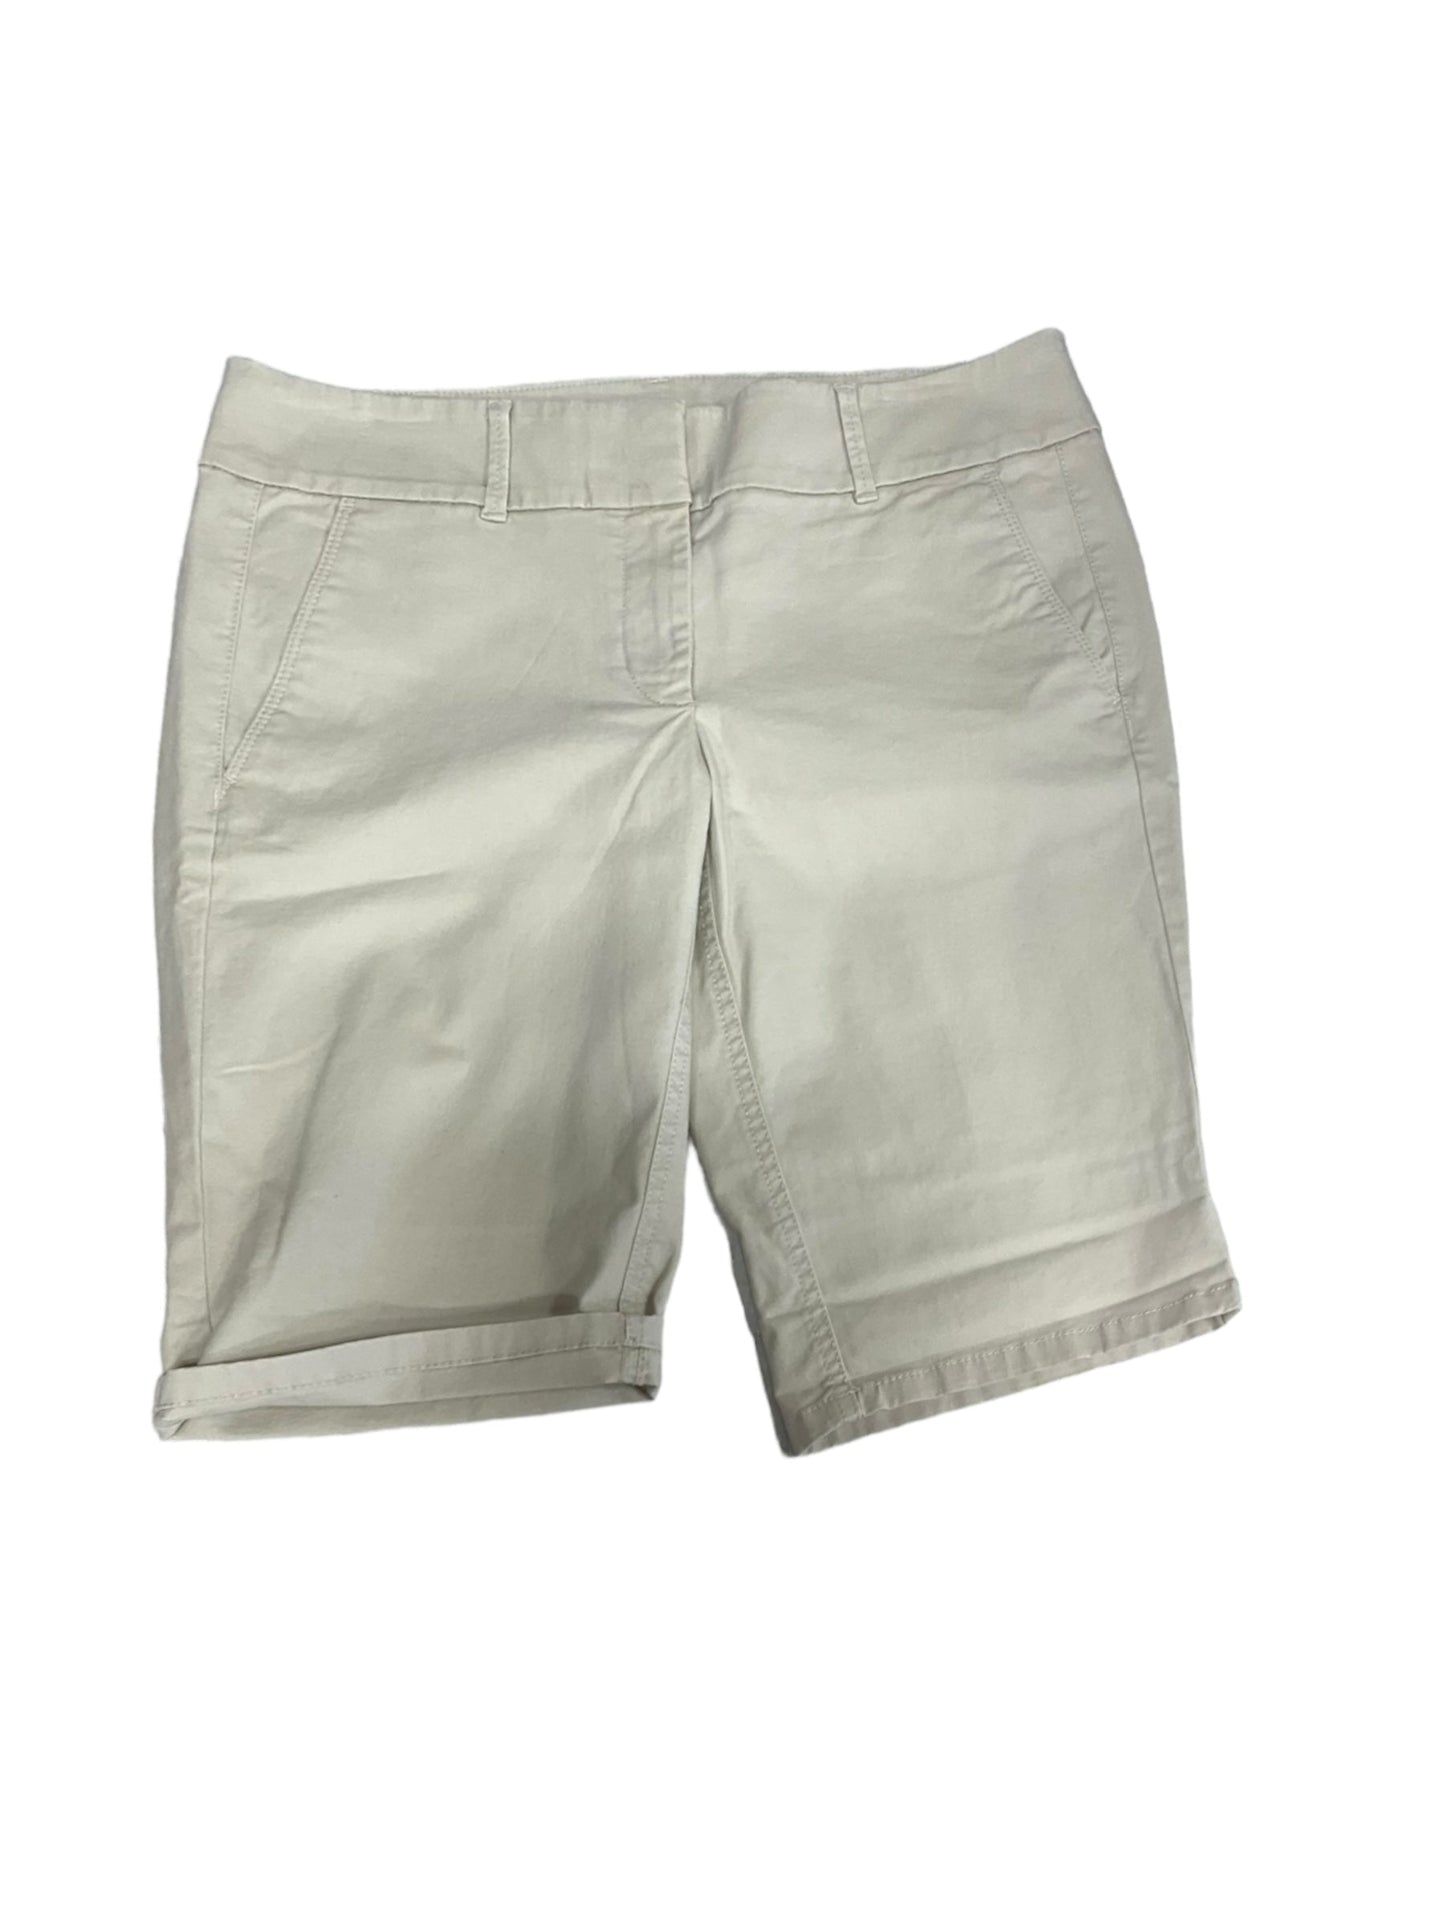 Tan Shorts Loft, Size 6